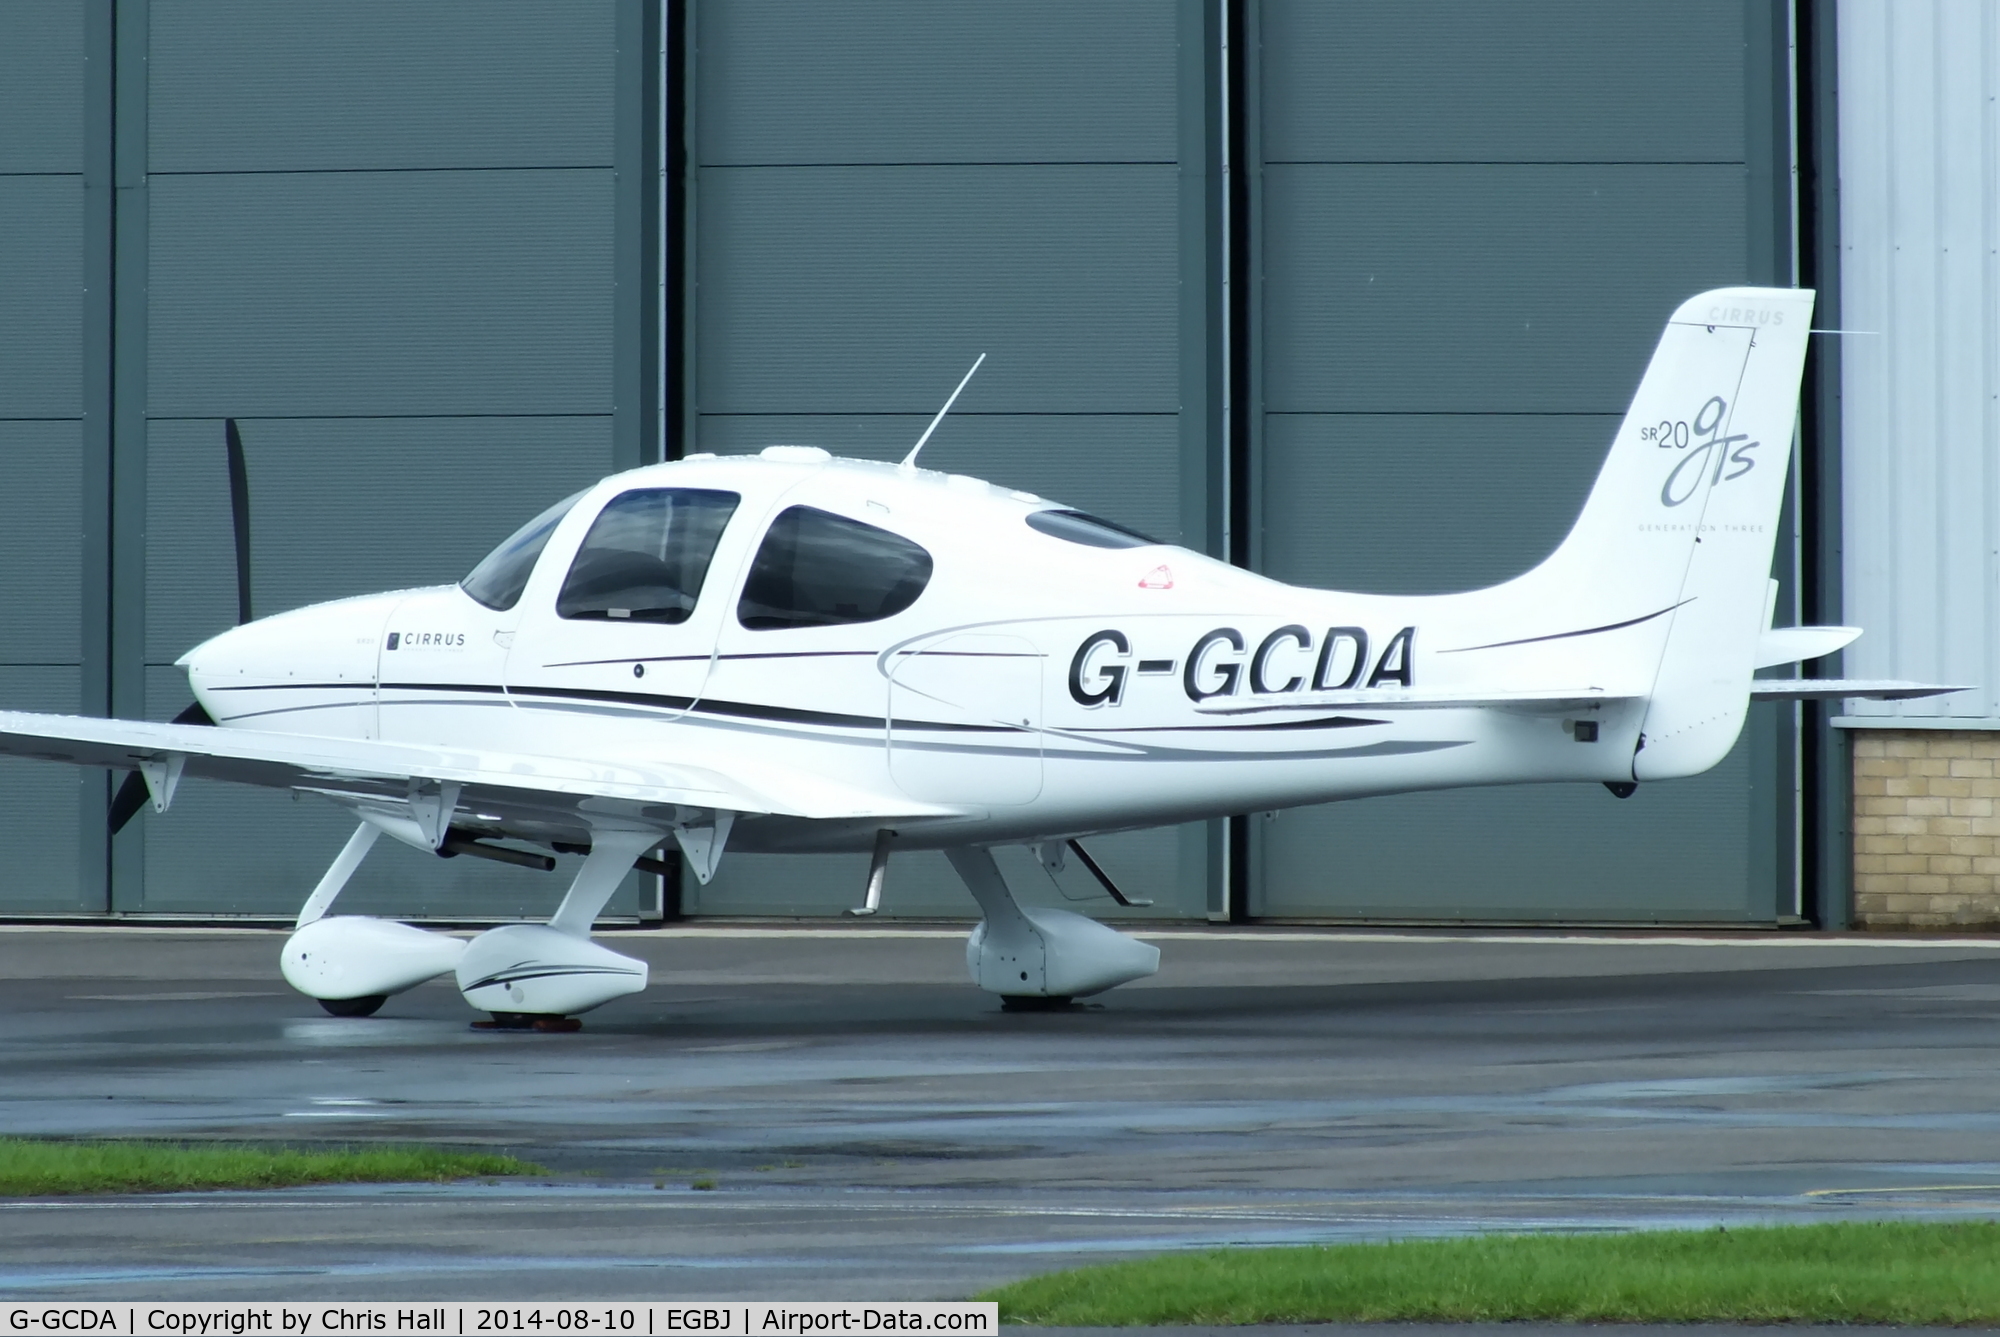 G-GCDA, 2008 Cirrus SR20 G3 GTS C/N 1962, Aircraft Grouping Ltd